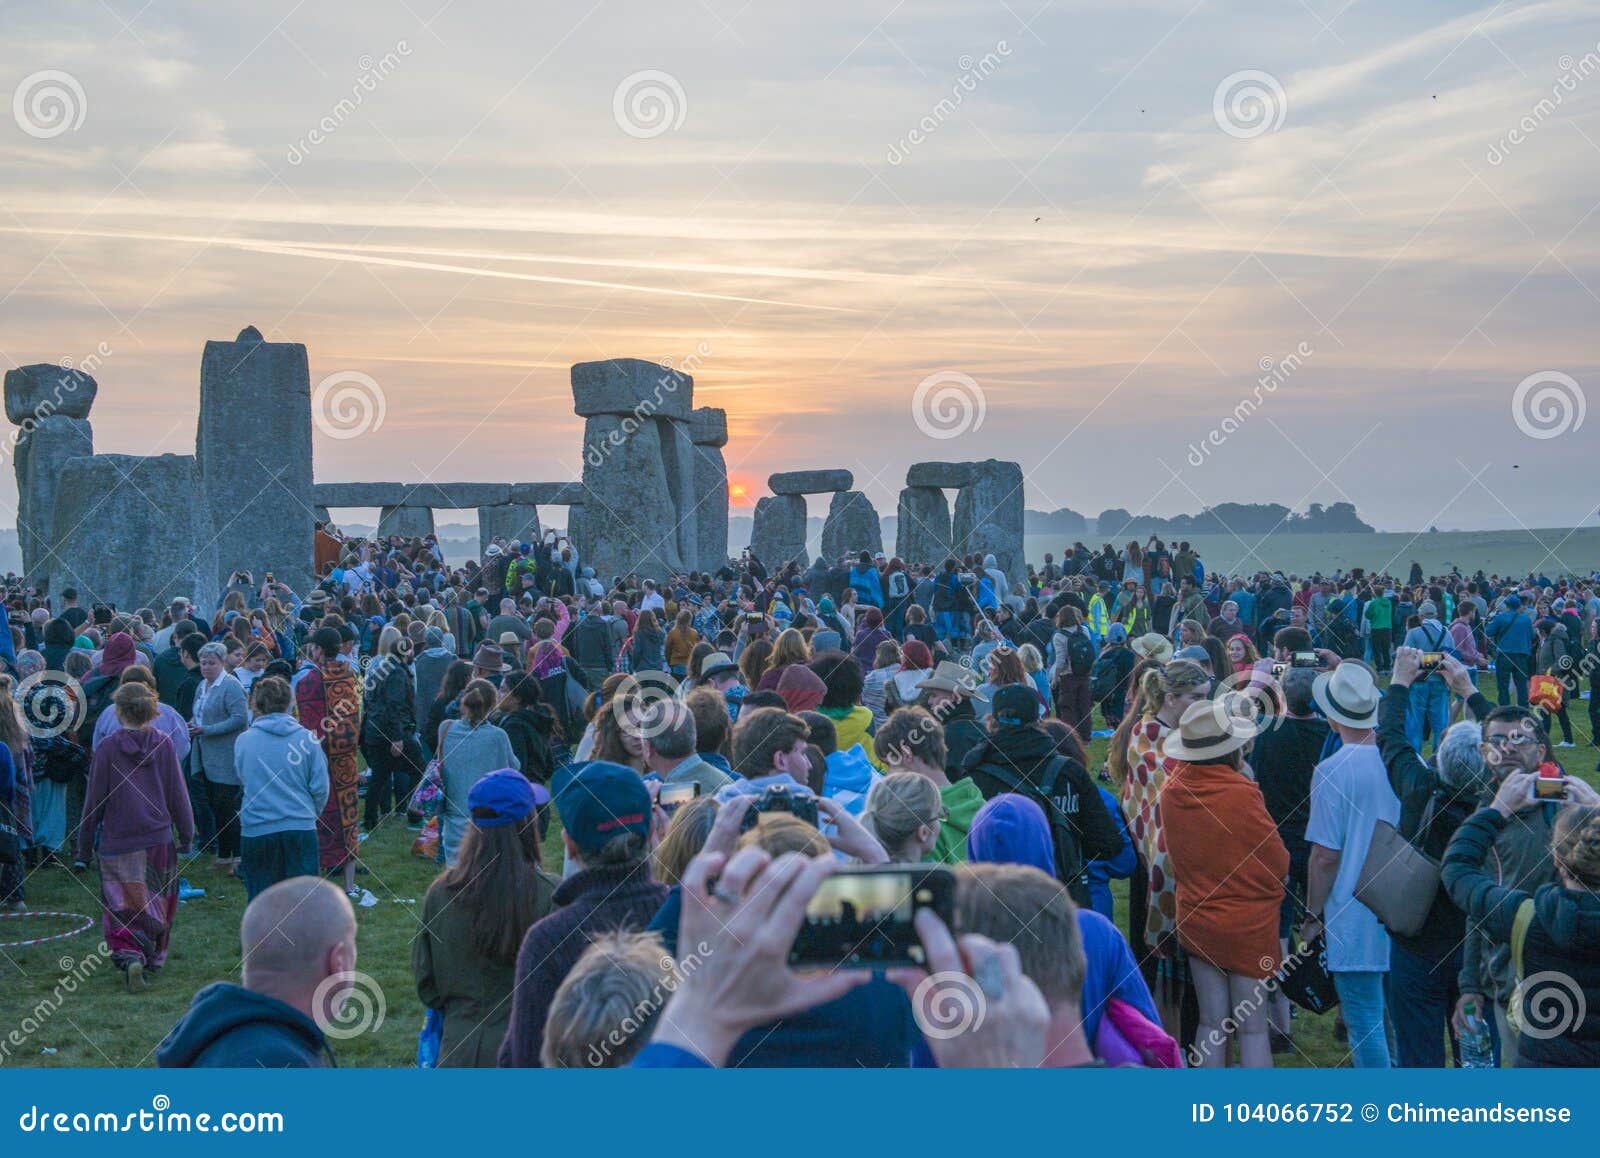 summer solstice sunrise on stonehenge